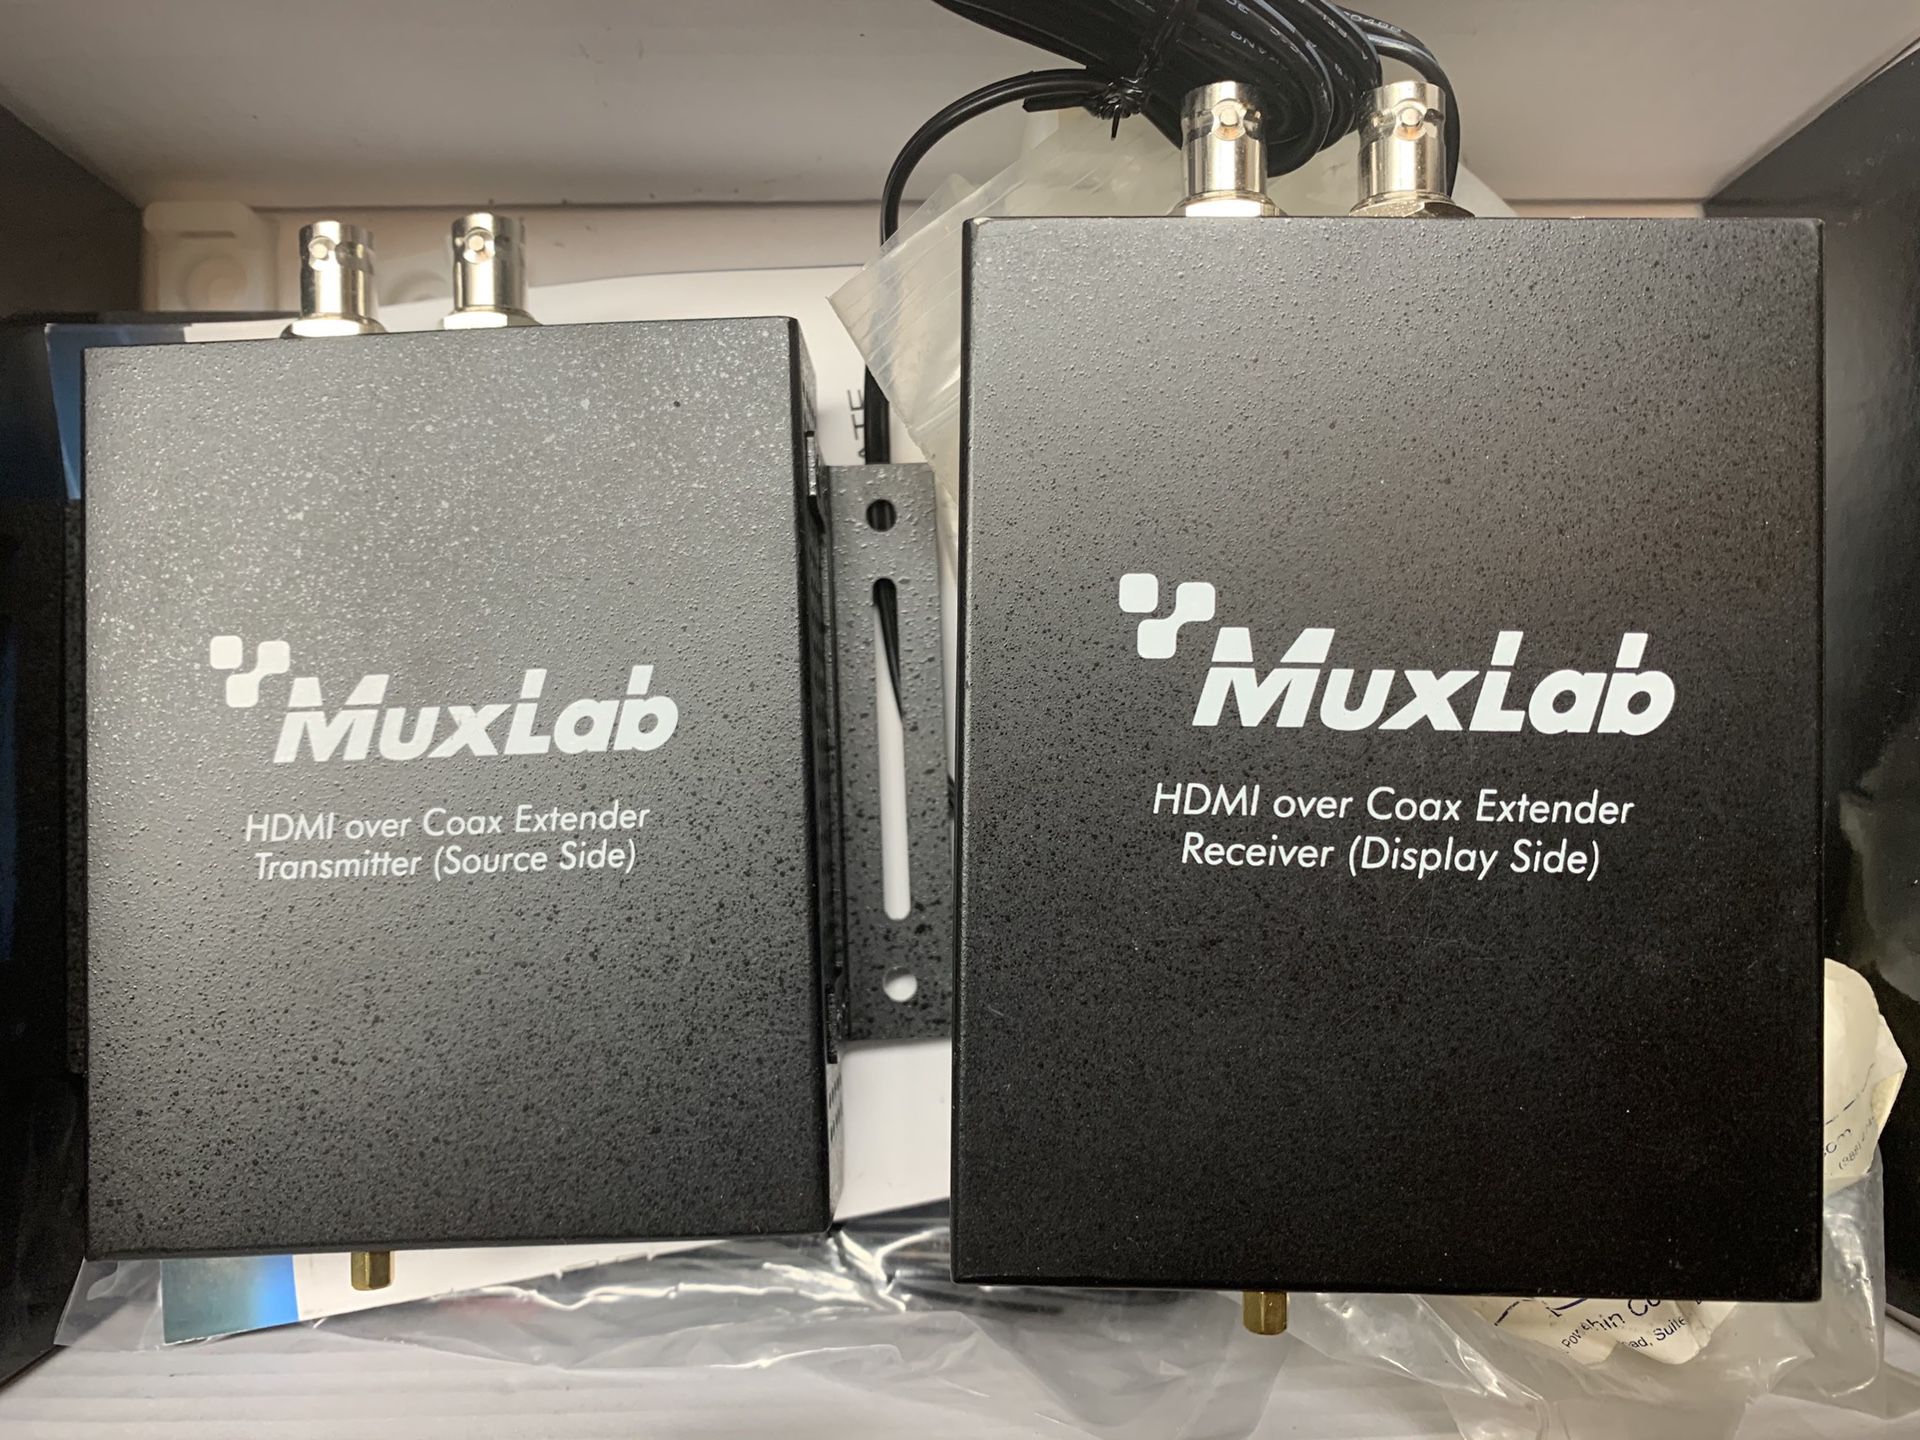 MuxLab HDMI over coax